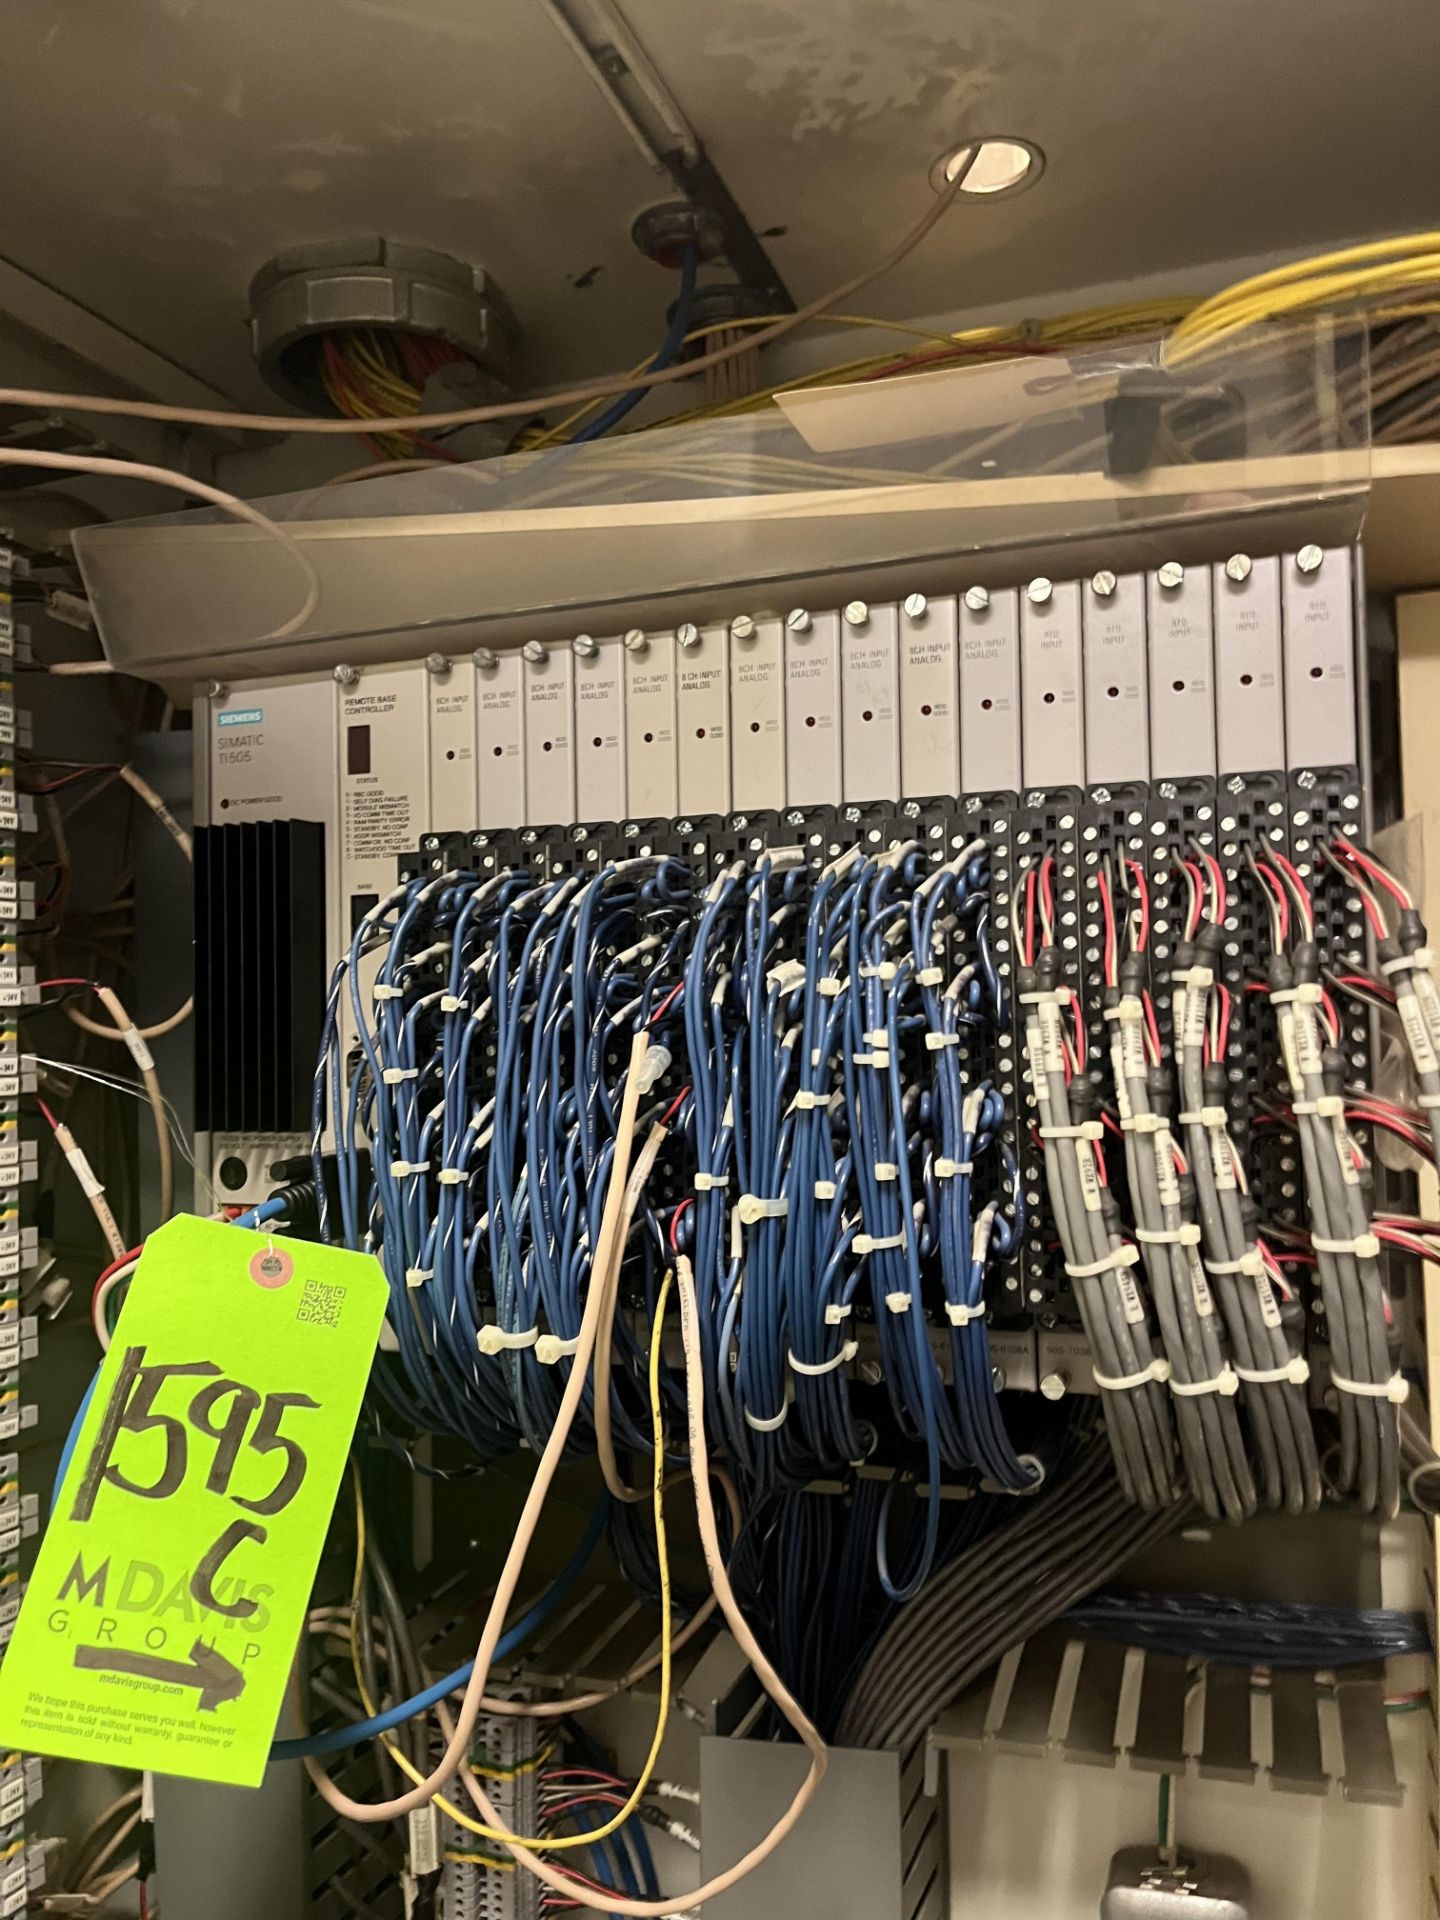 (2)SIEMENS SIMATIC Tl505 PLC POWER RACK (Located Freehold, NJ) (Simple Loading Fee $275)